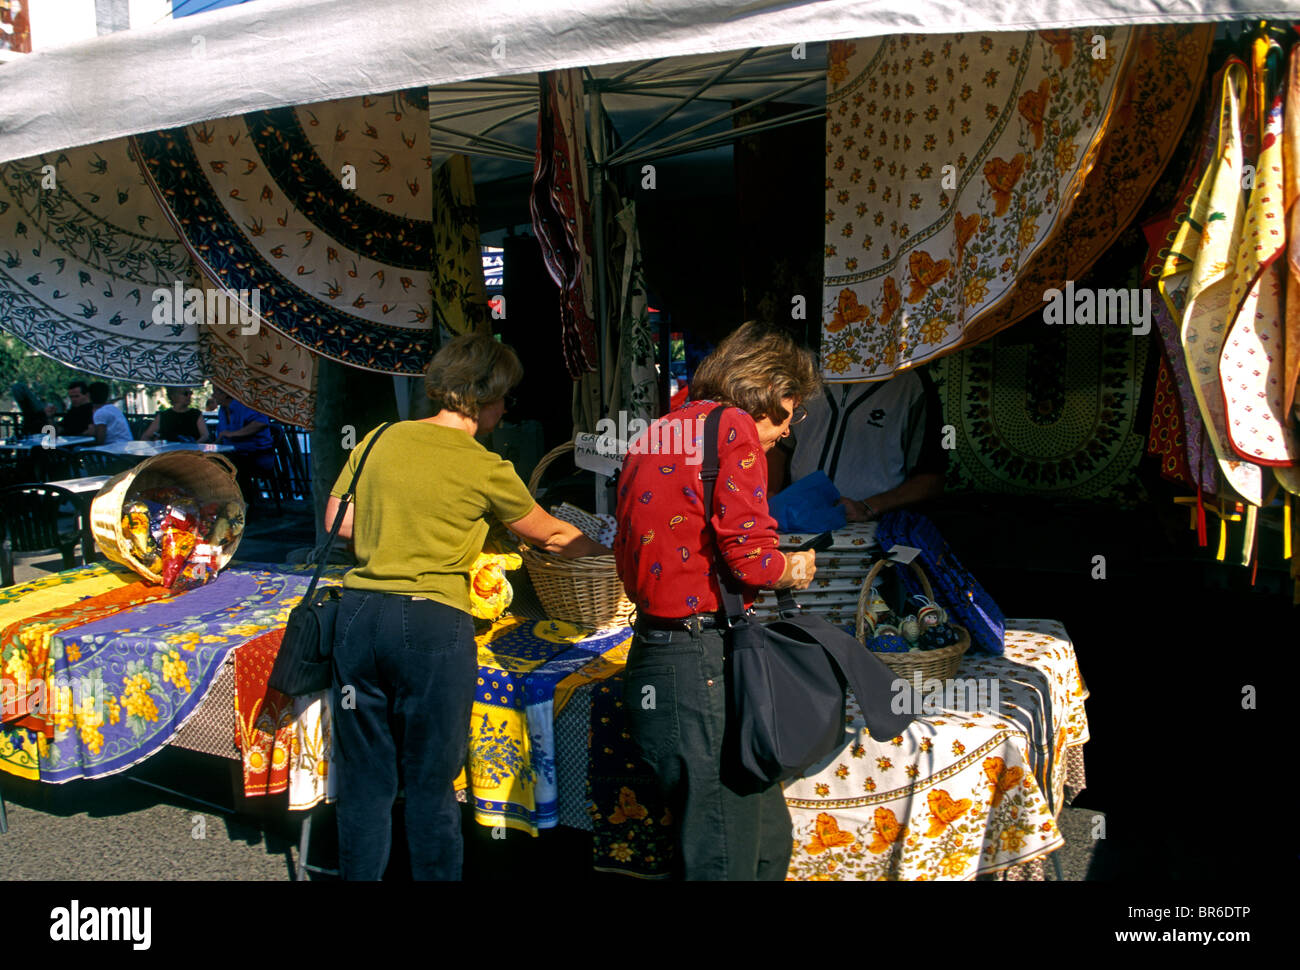 fabric vendor, selling fabrics, tablecloths, linen, linens, Wednesday Market, city, Saint-Remy-de-Provence, Provence, France, Europe Stock Photo